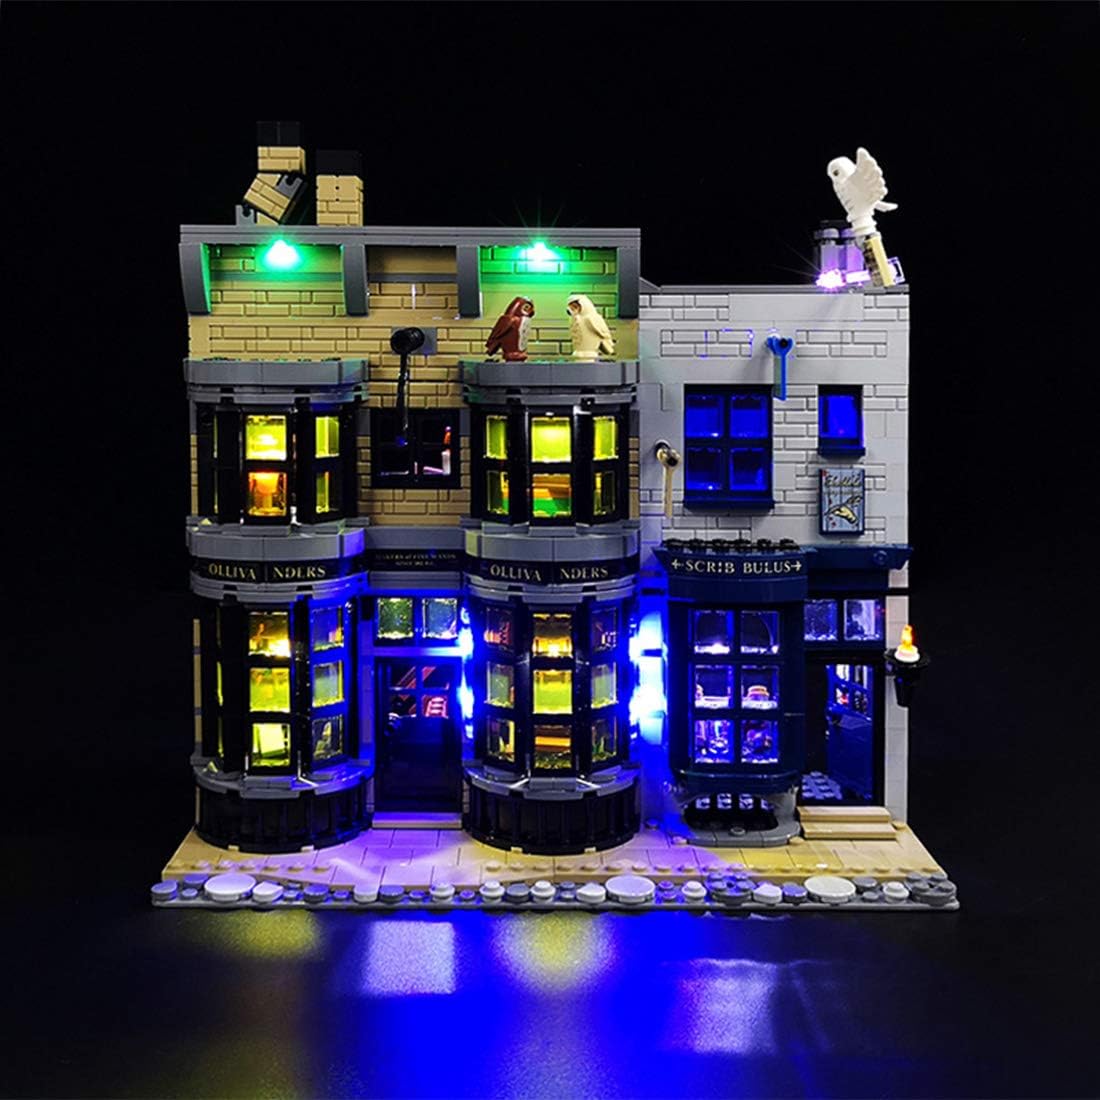 LED Light Kit for Harry Potter Diagon Alley 75978 Building Kit (2020), Lighting Kit Compatible with Lego 75978 Building Blocks Model, No Lego Set- Remote Control Version